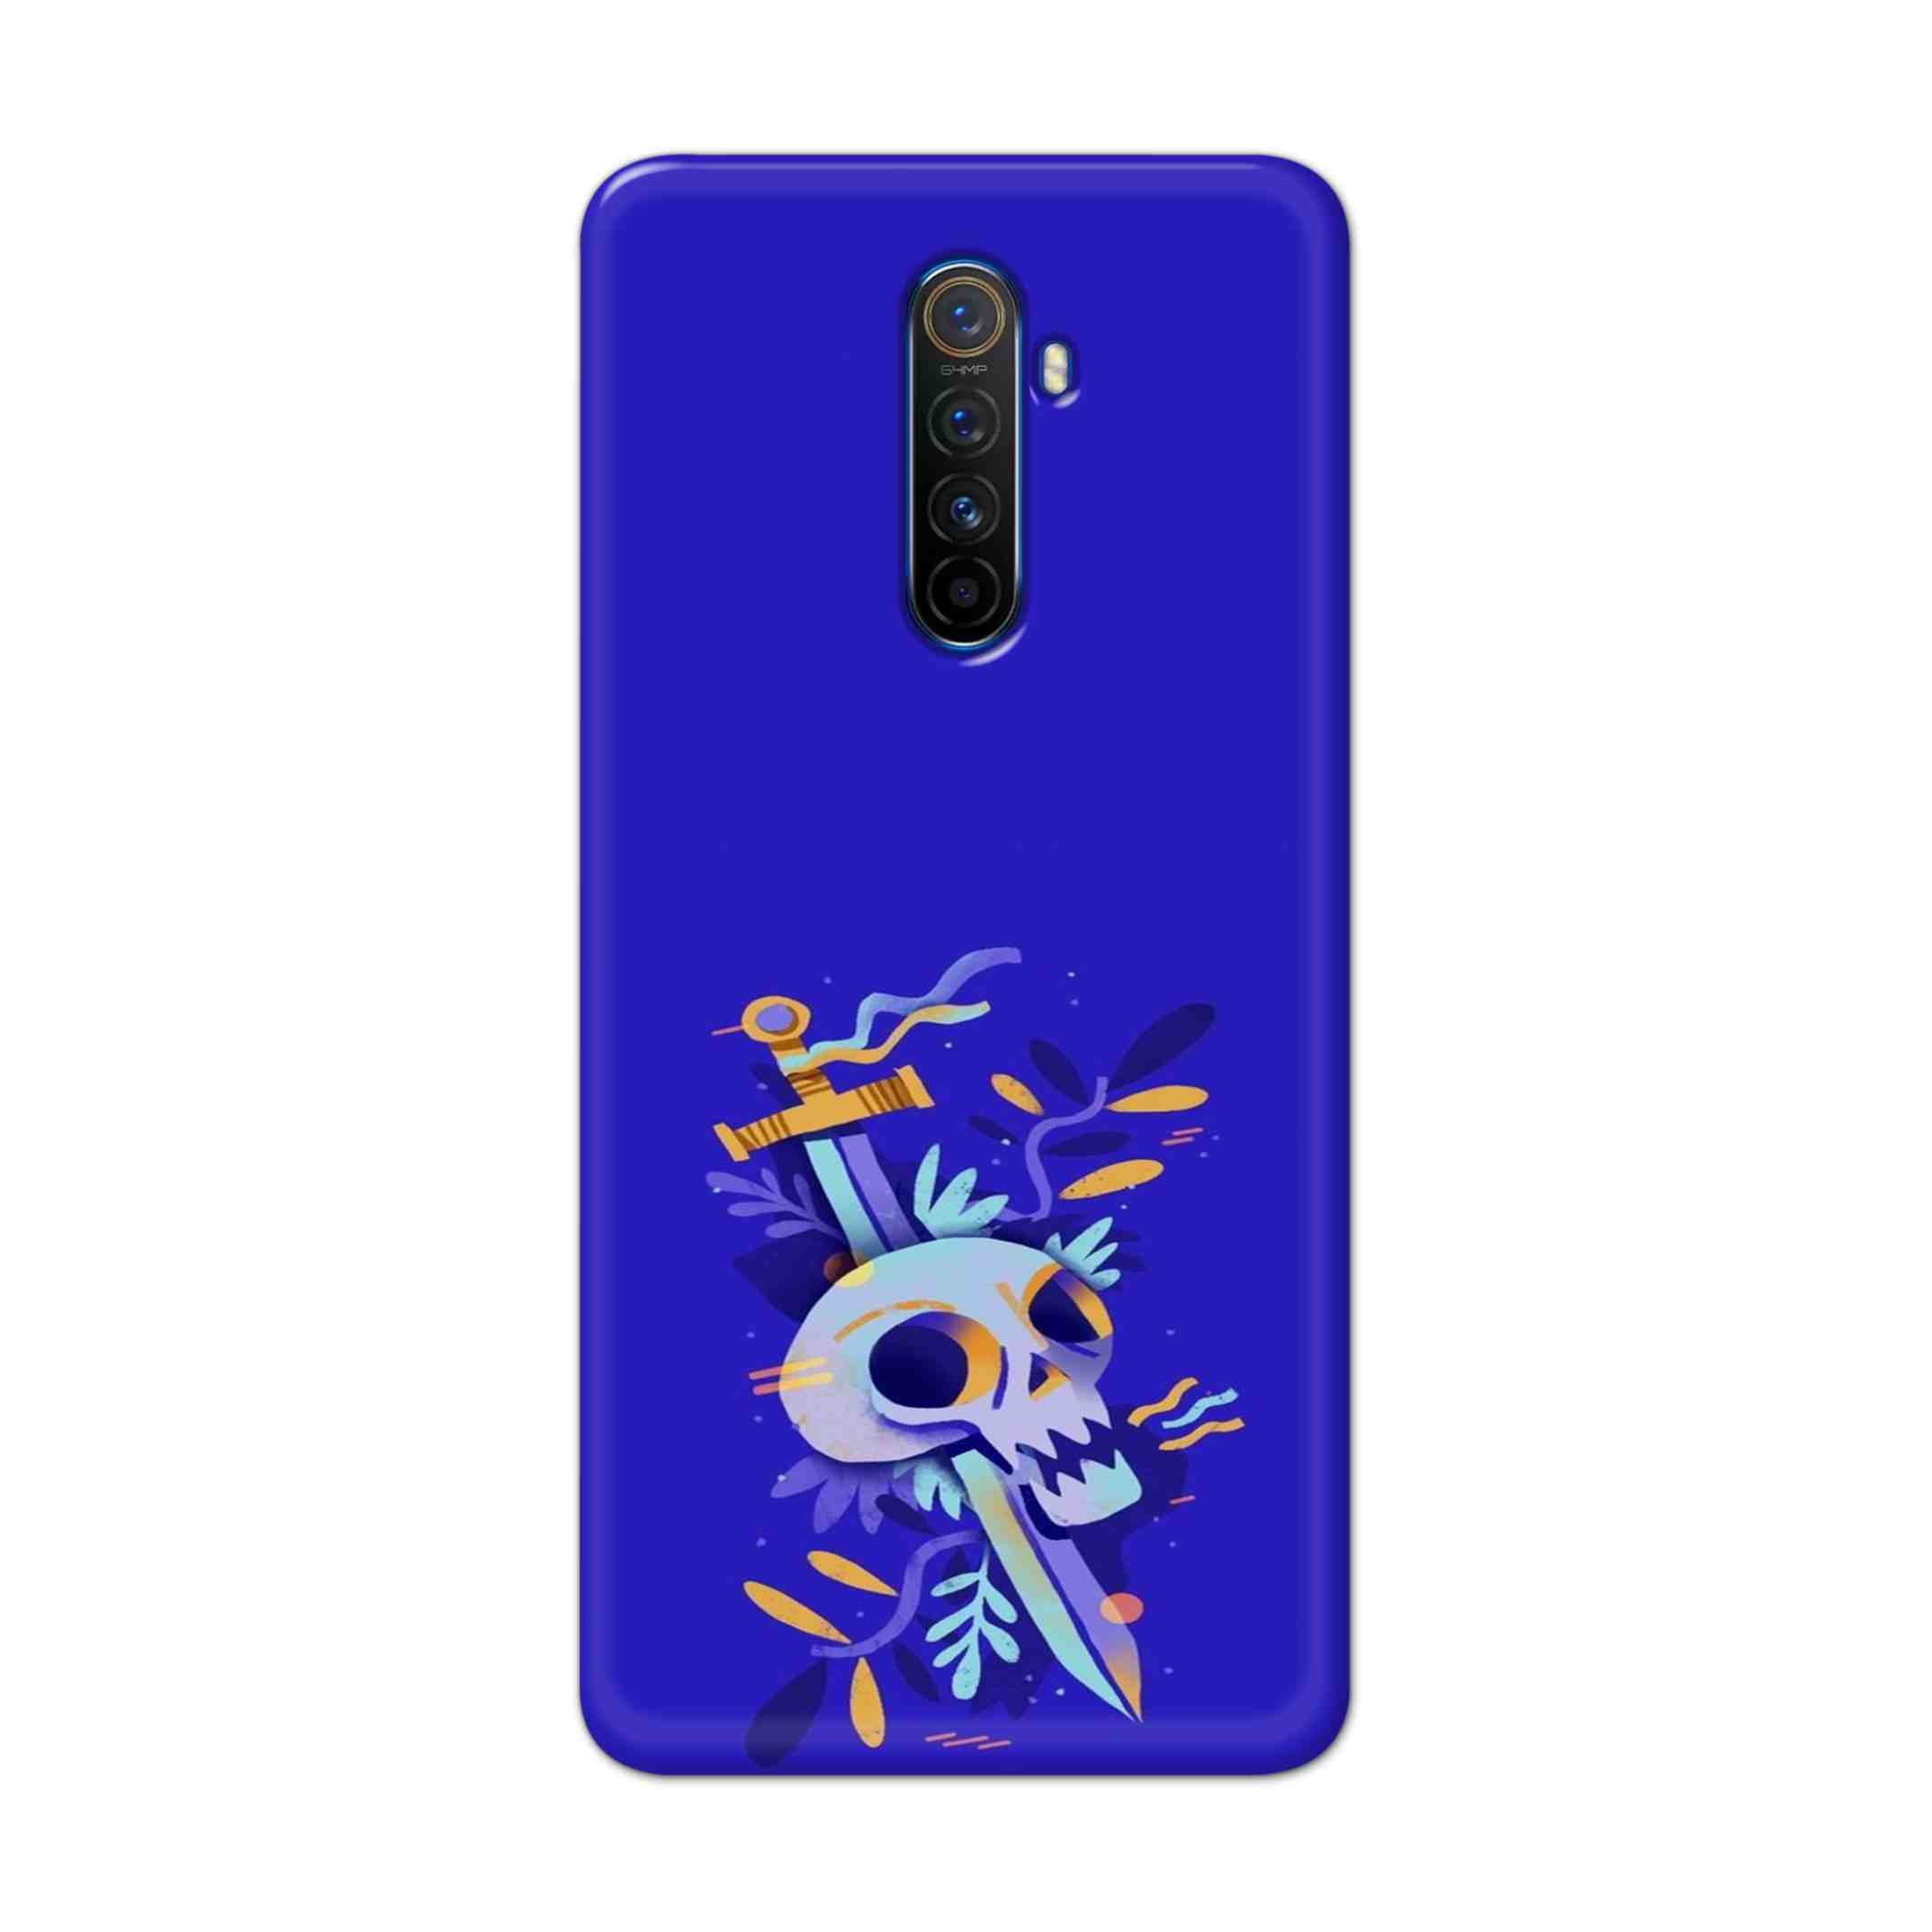 Buy Blue Skull Hard Back Mobile Phone Case Cover For Realme X2 Pro Online